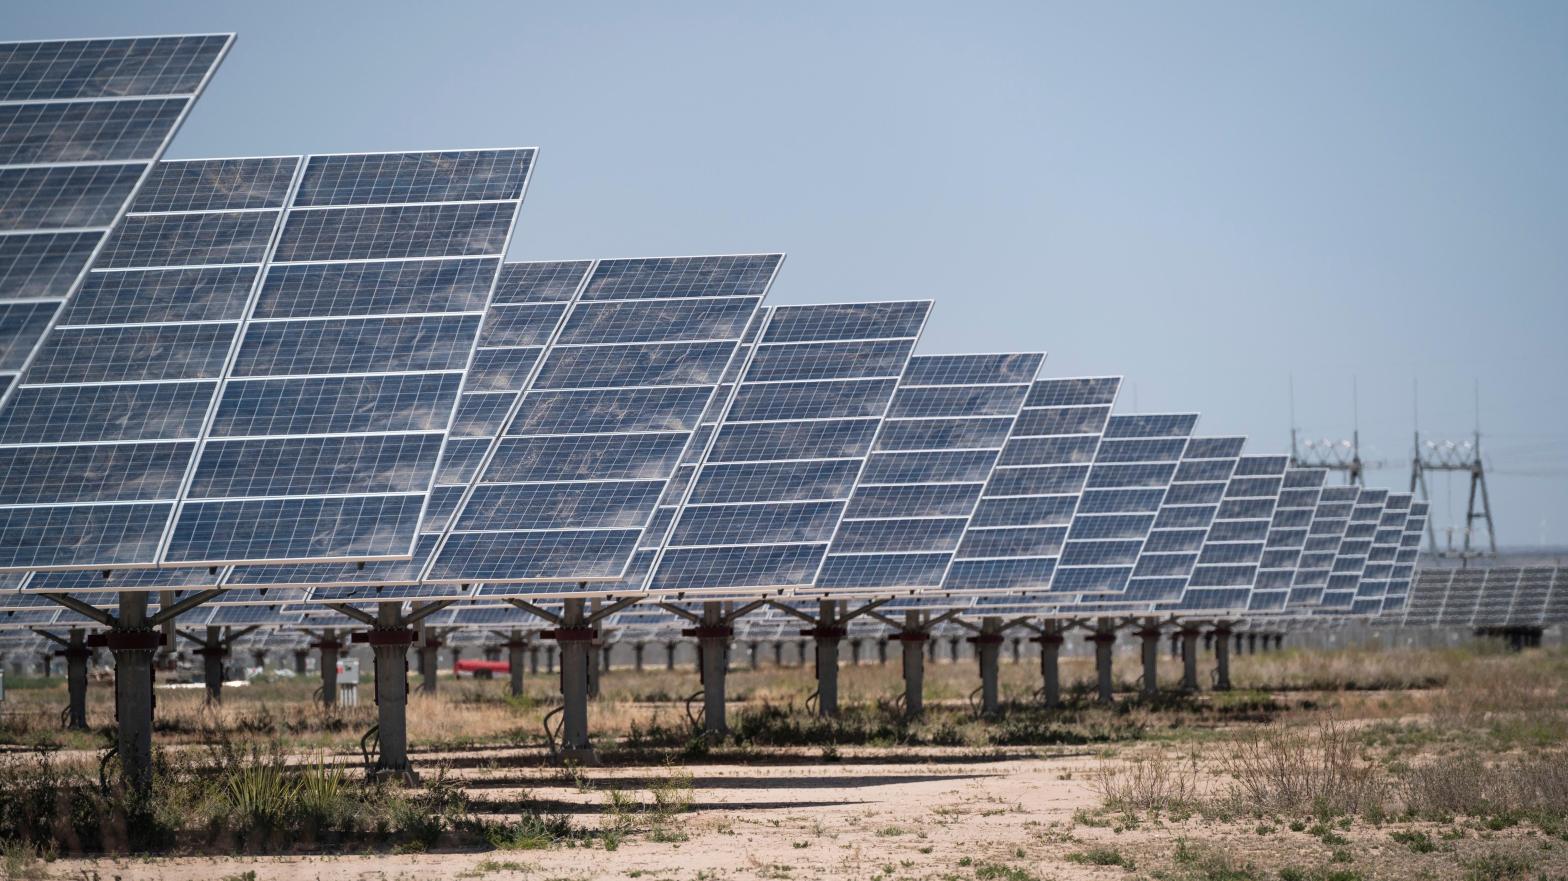 A solar farm produces electricity near Bakersfield, Texas on Saturday, April 10, 2021.  (Photo: Bill Clark/CQ Roll Call, AP)